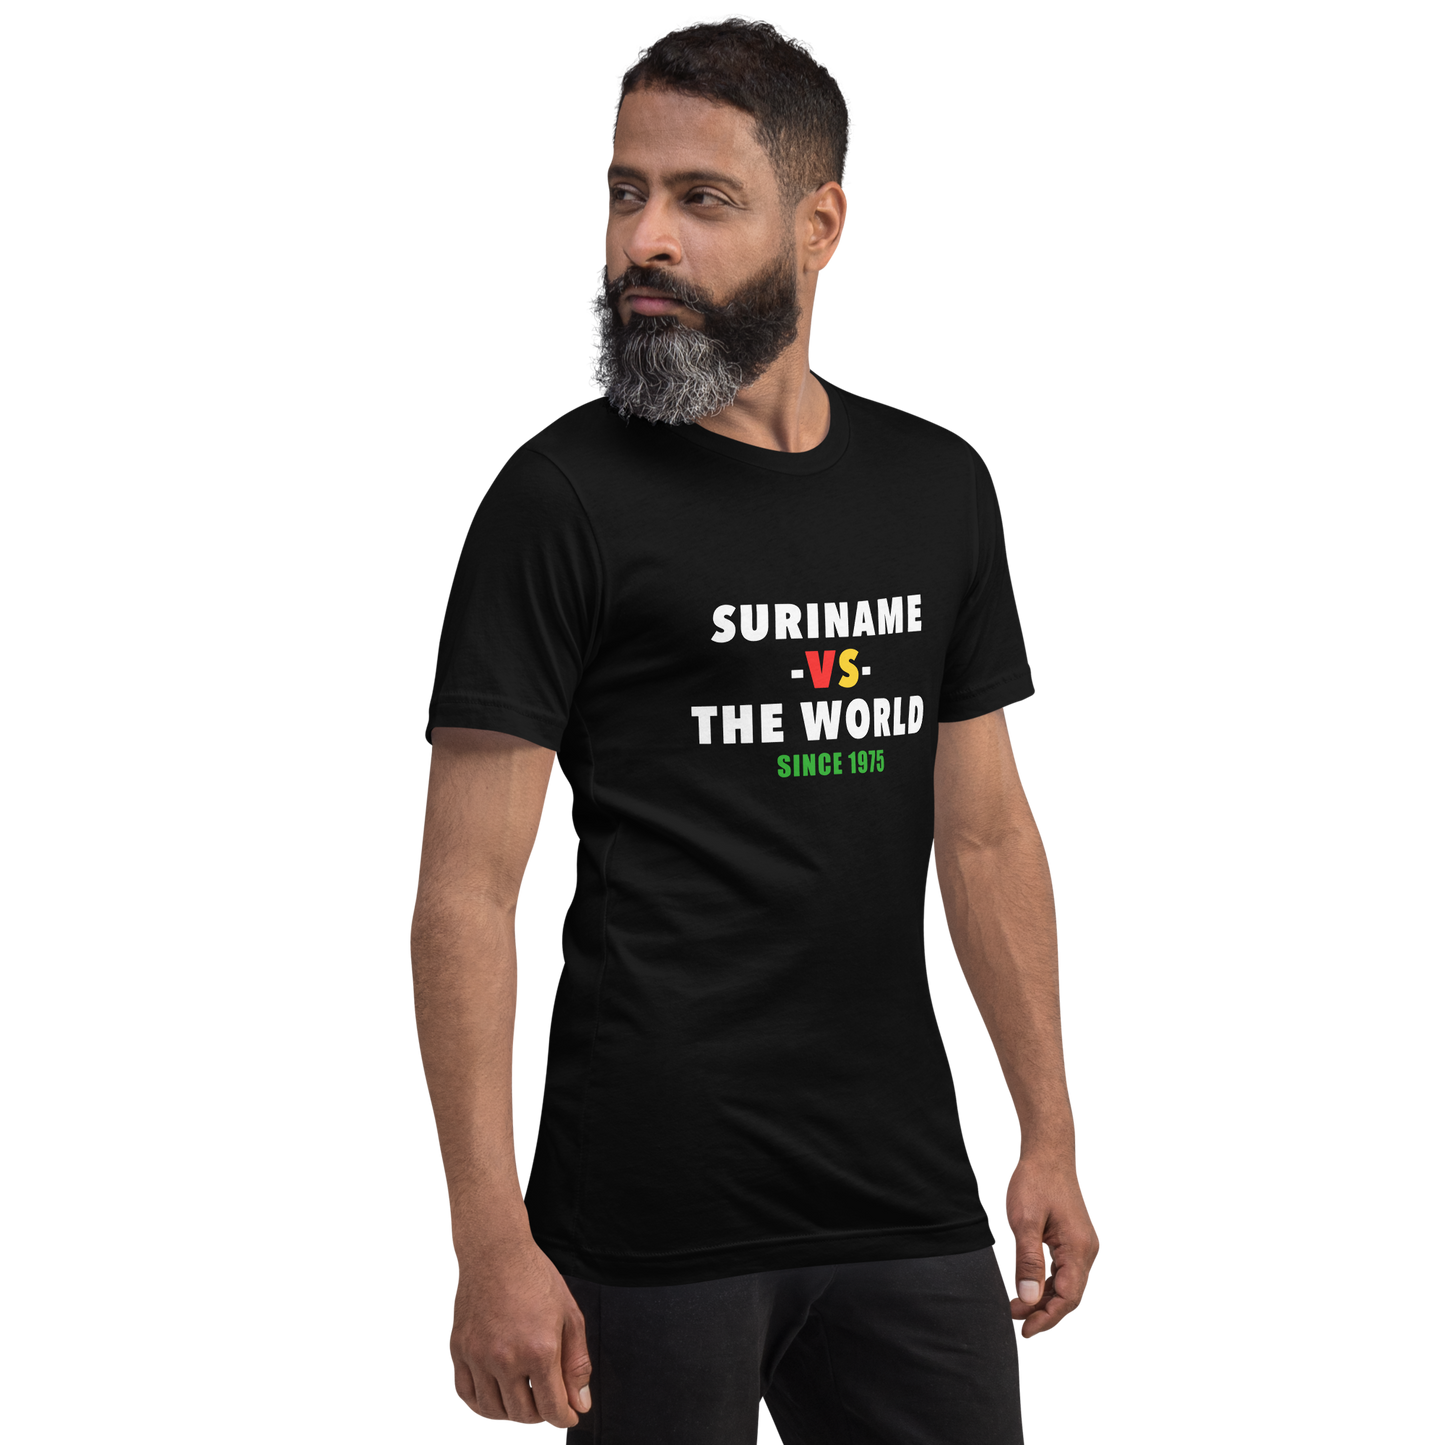 Suriname -vs- The World Unisex t-shirt